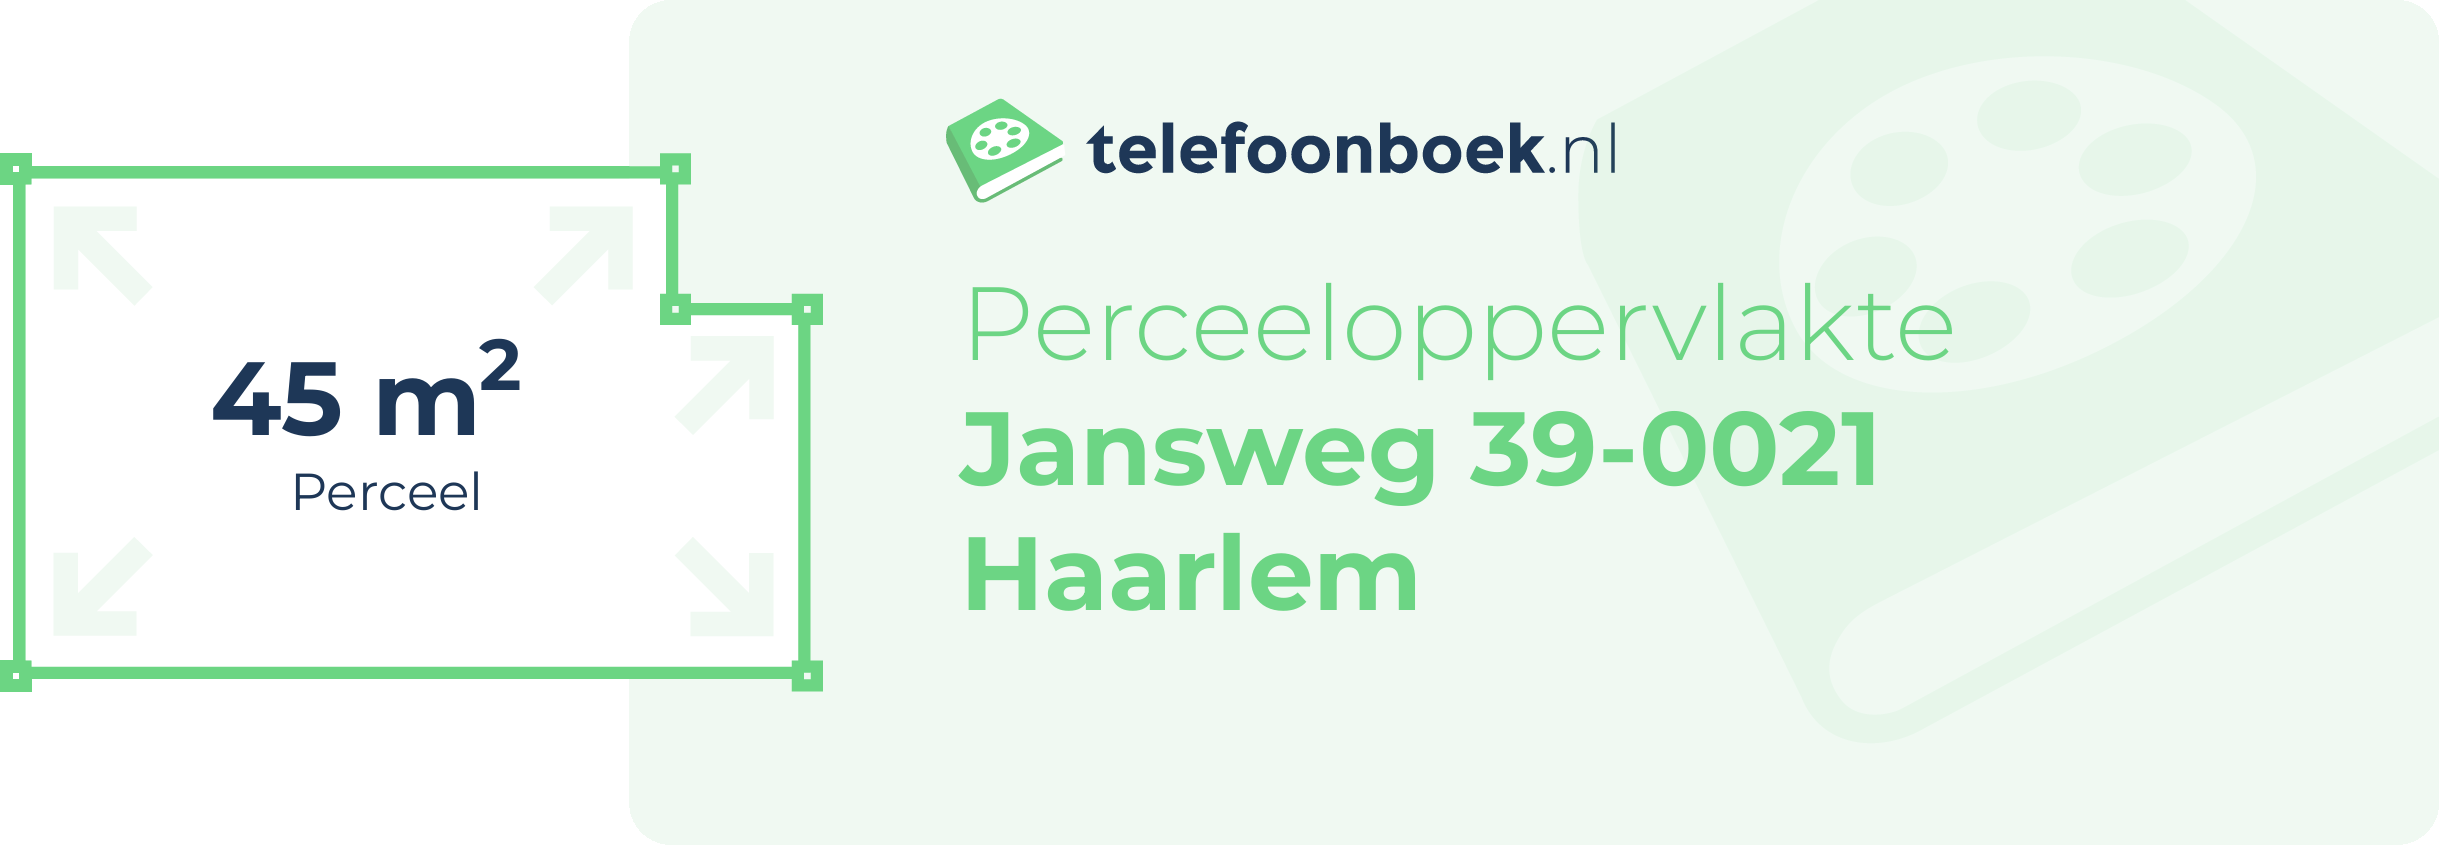 Perceeloppervlakte Jansweg 39-0021 Haarlem